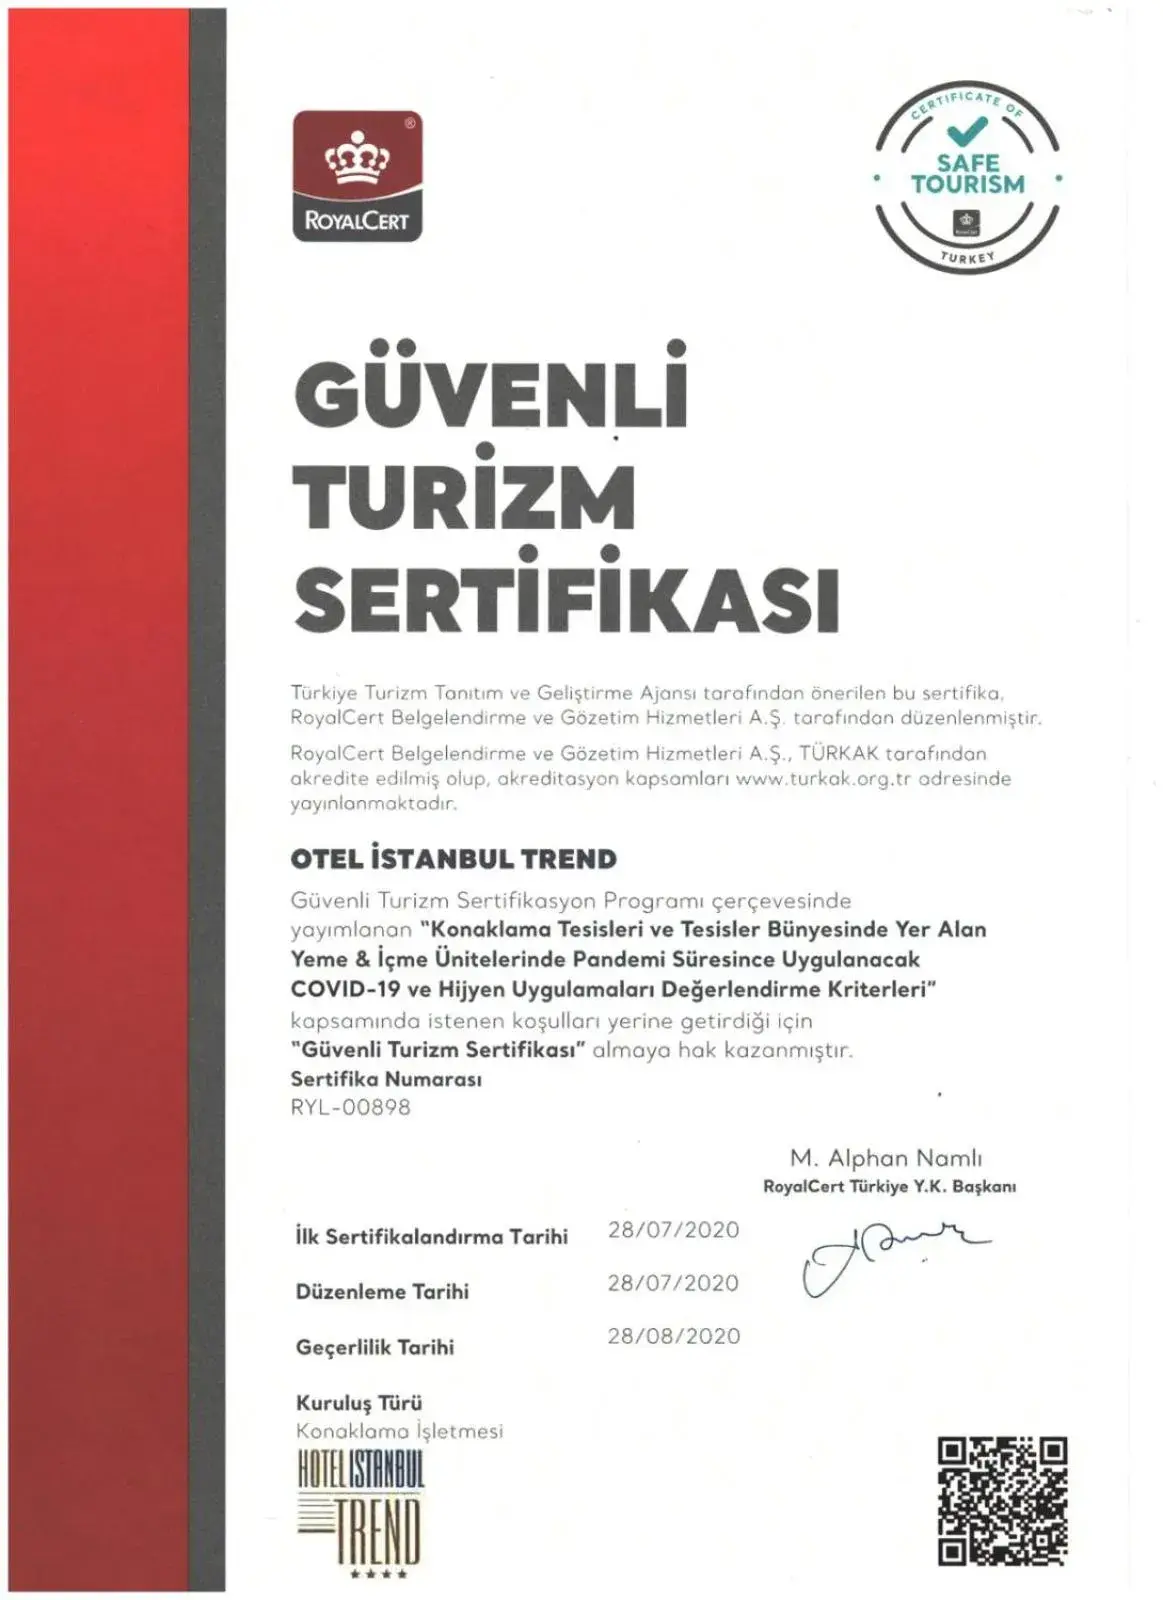 Certificate/Award in Hotel Istanbul Trend